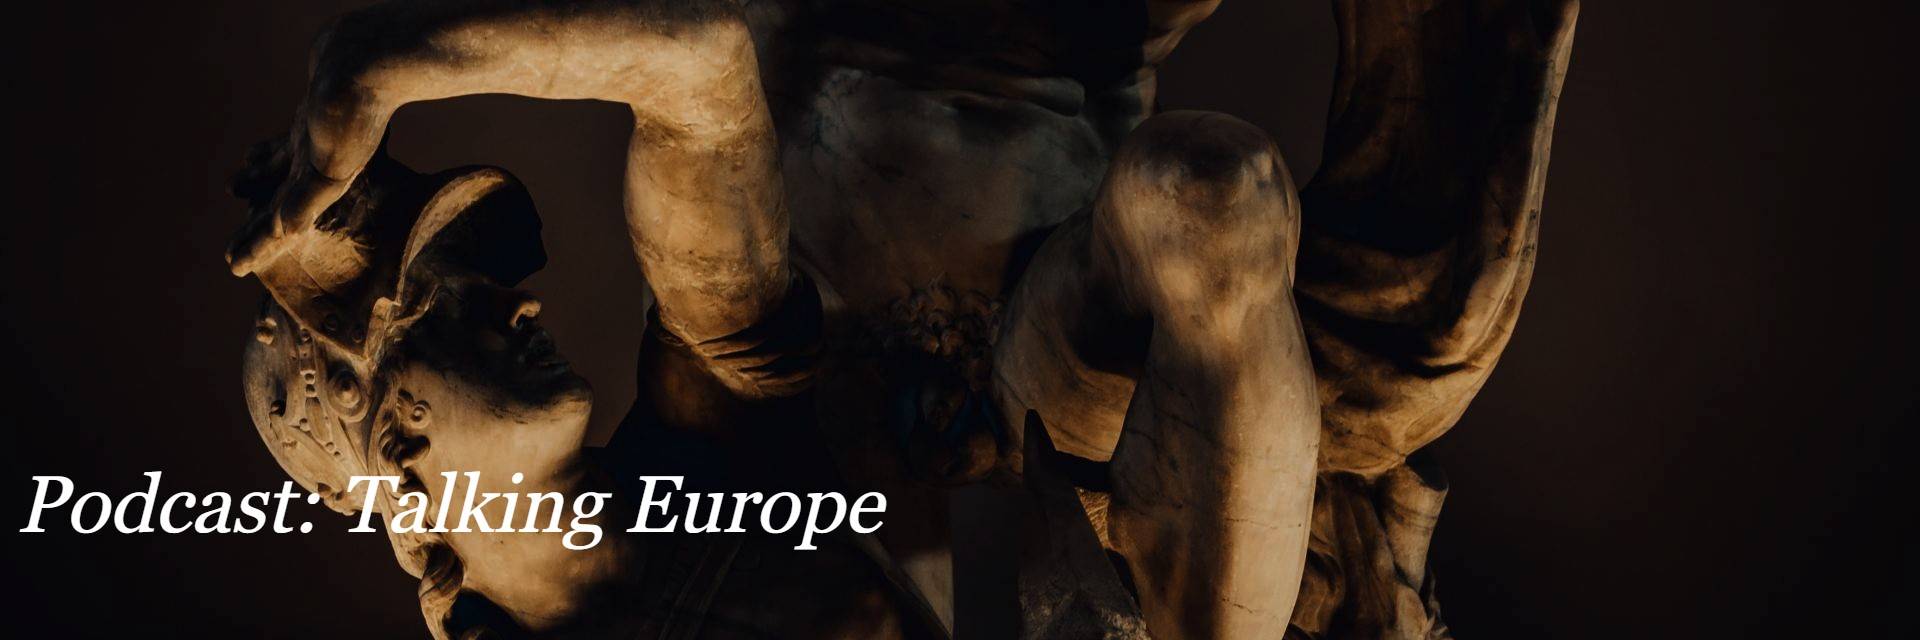 Podcast: Talking Europe